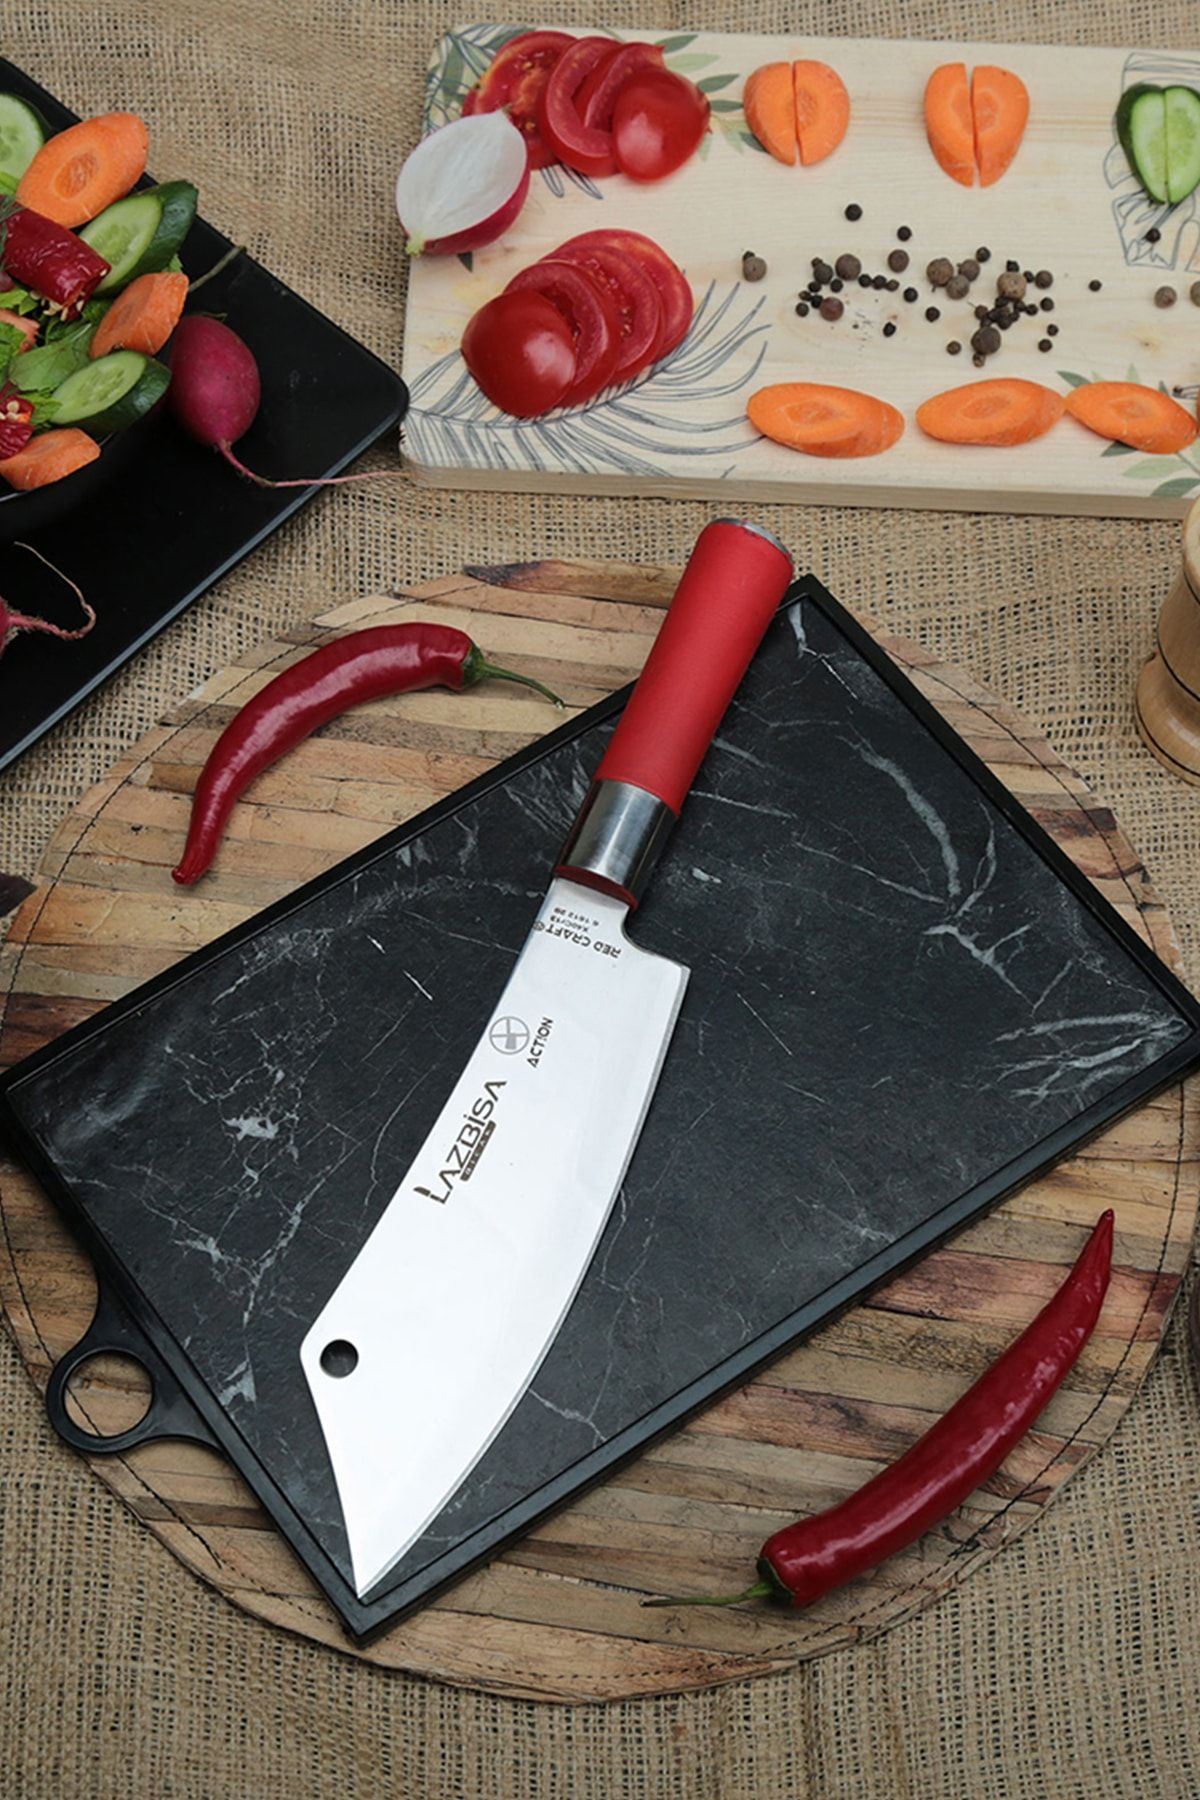 LAZBİSA Mutfak Bıçak Seti Et Sebze Ekmek Meyve Şef Bıçağı ( Action ) Red Craft Serisi